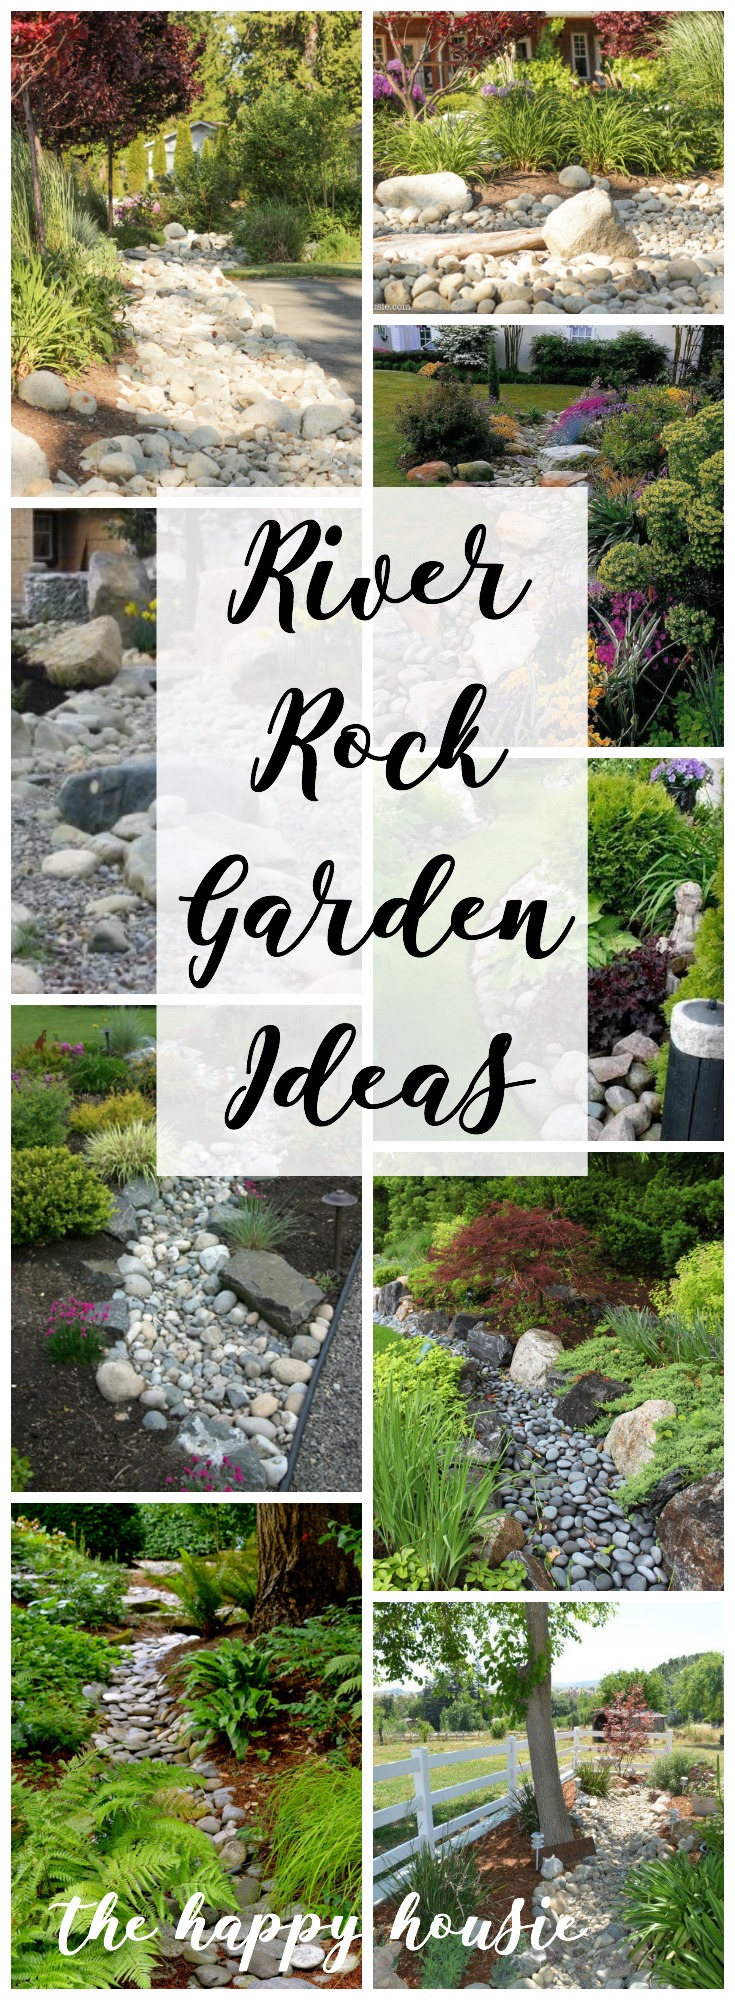 Dry River Rock Garden Ideas, Small River Rock Landscaping Ideas